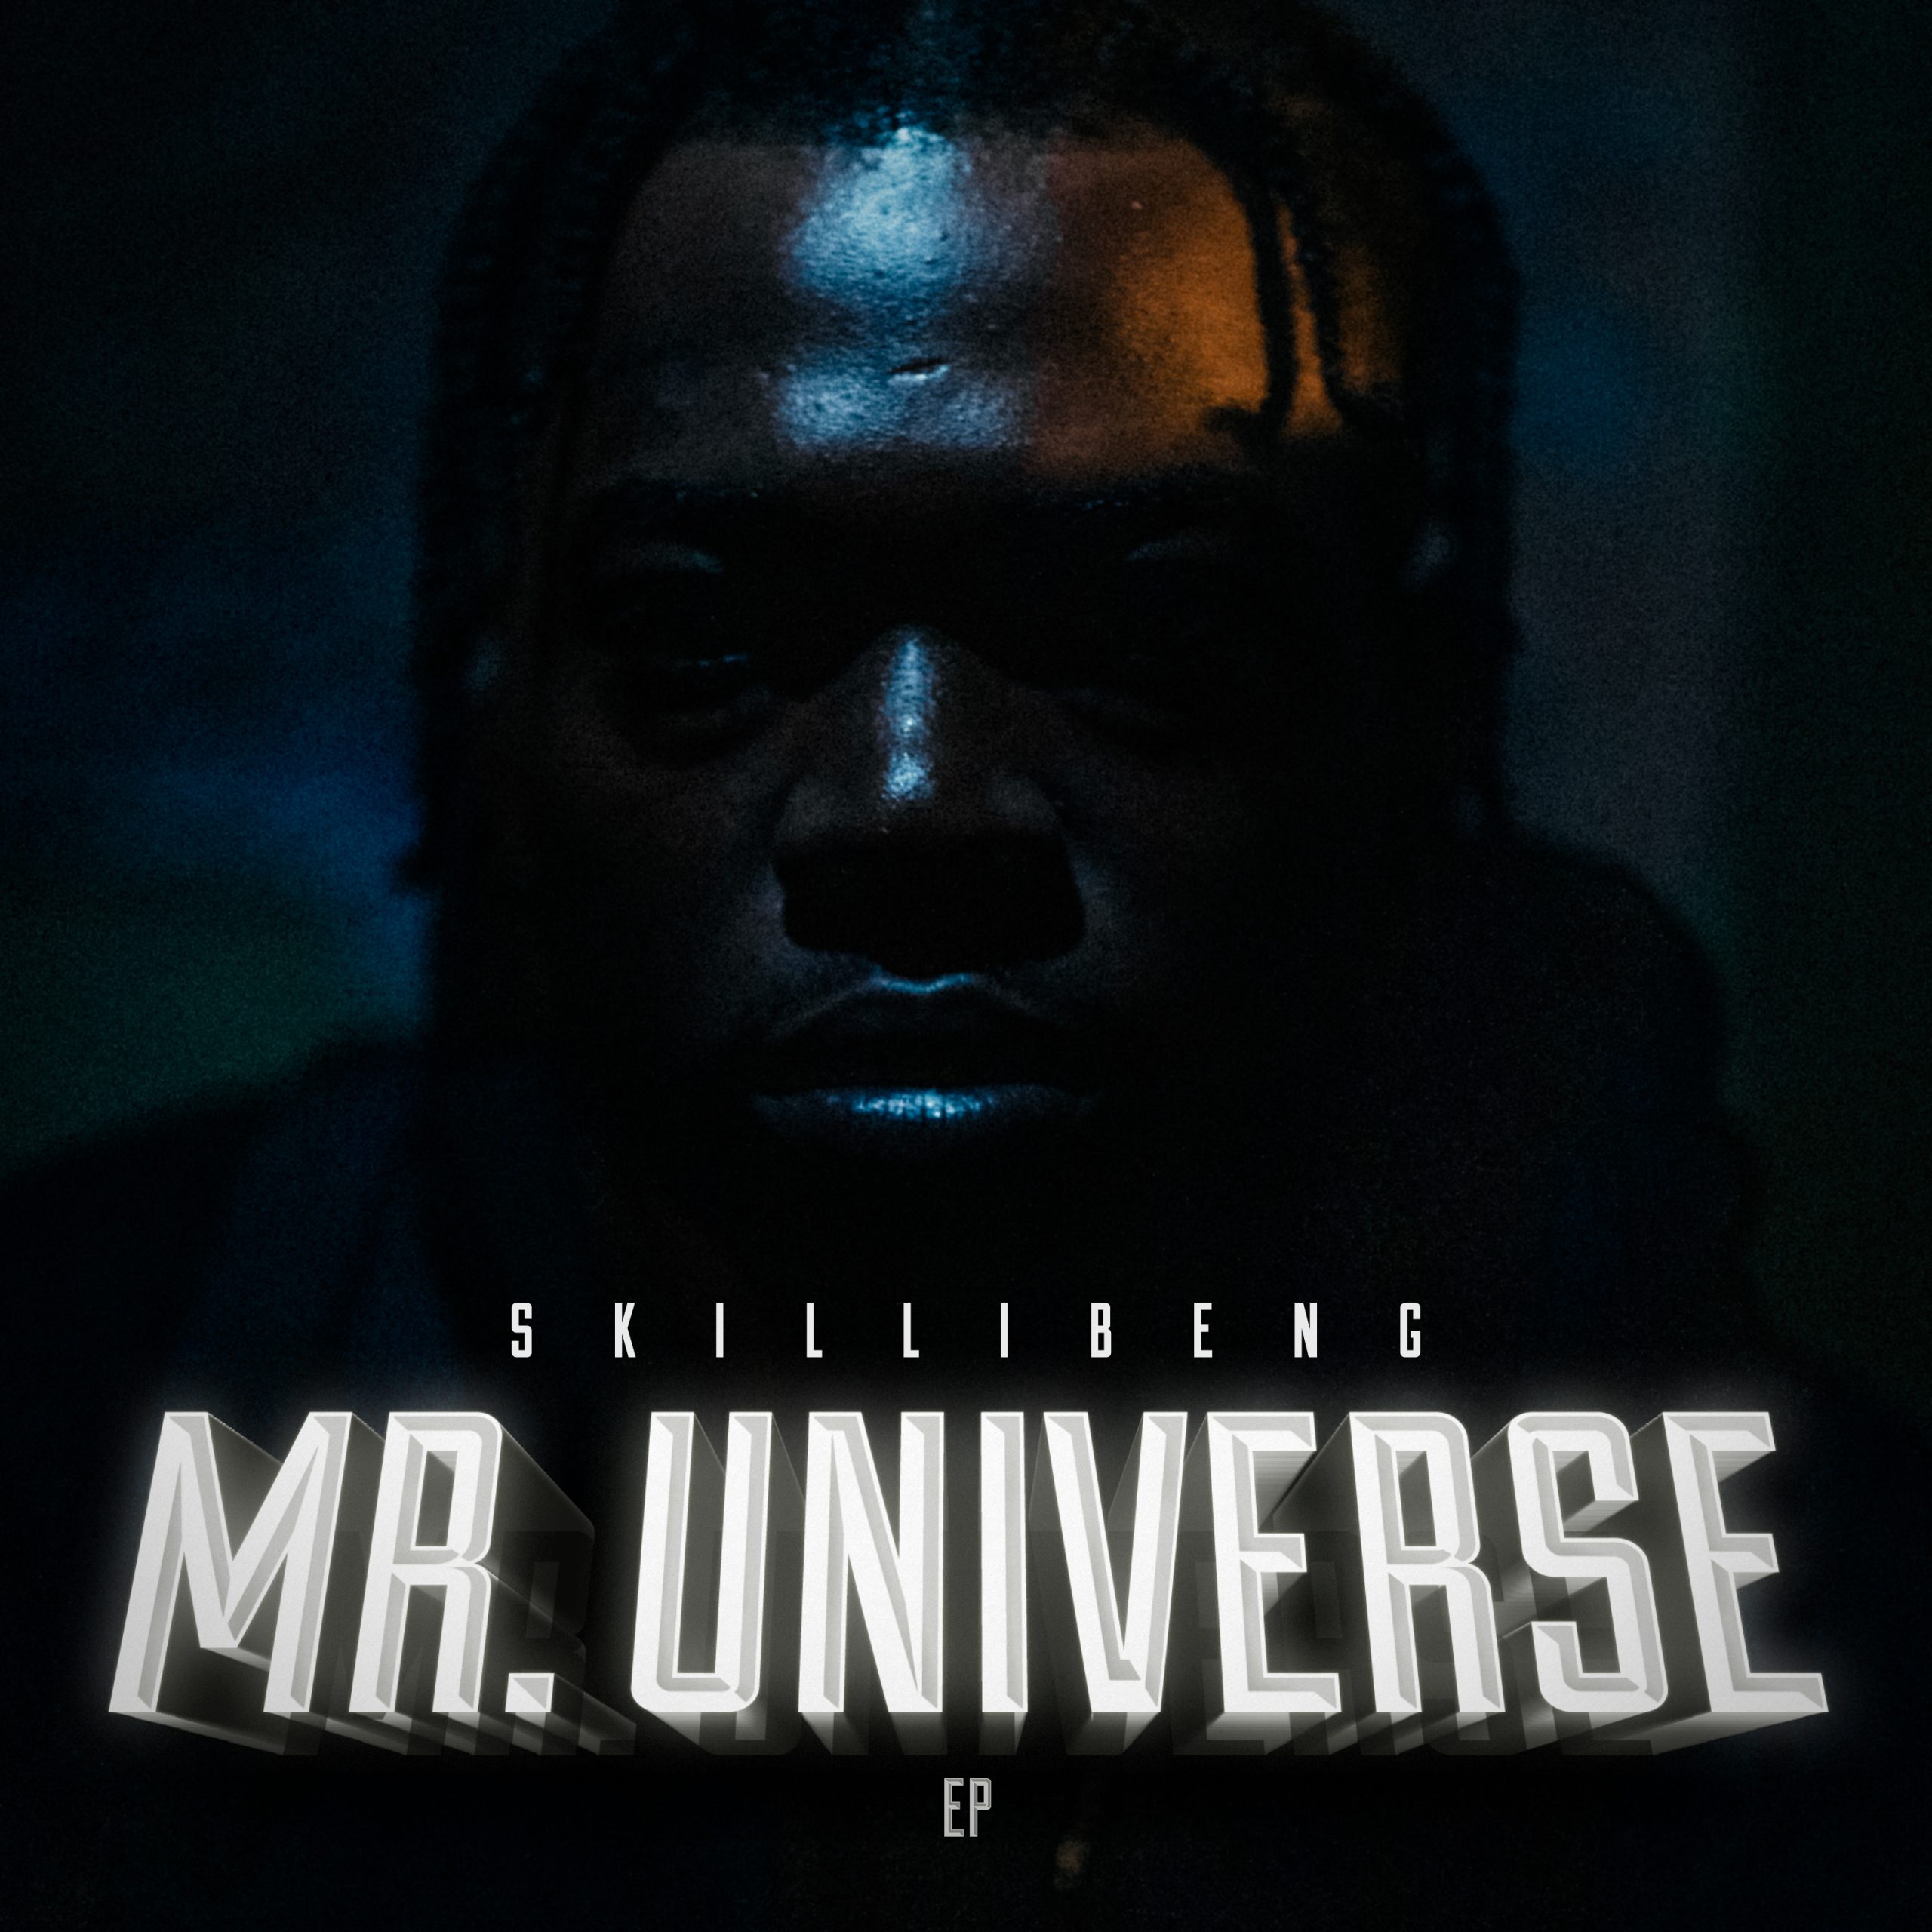 MR UNIVERSE COVER EP